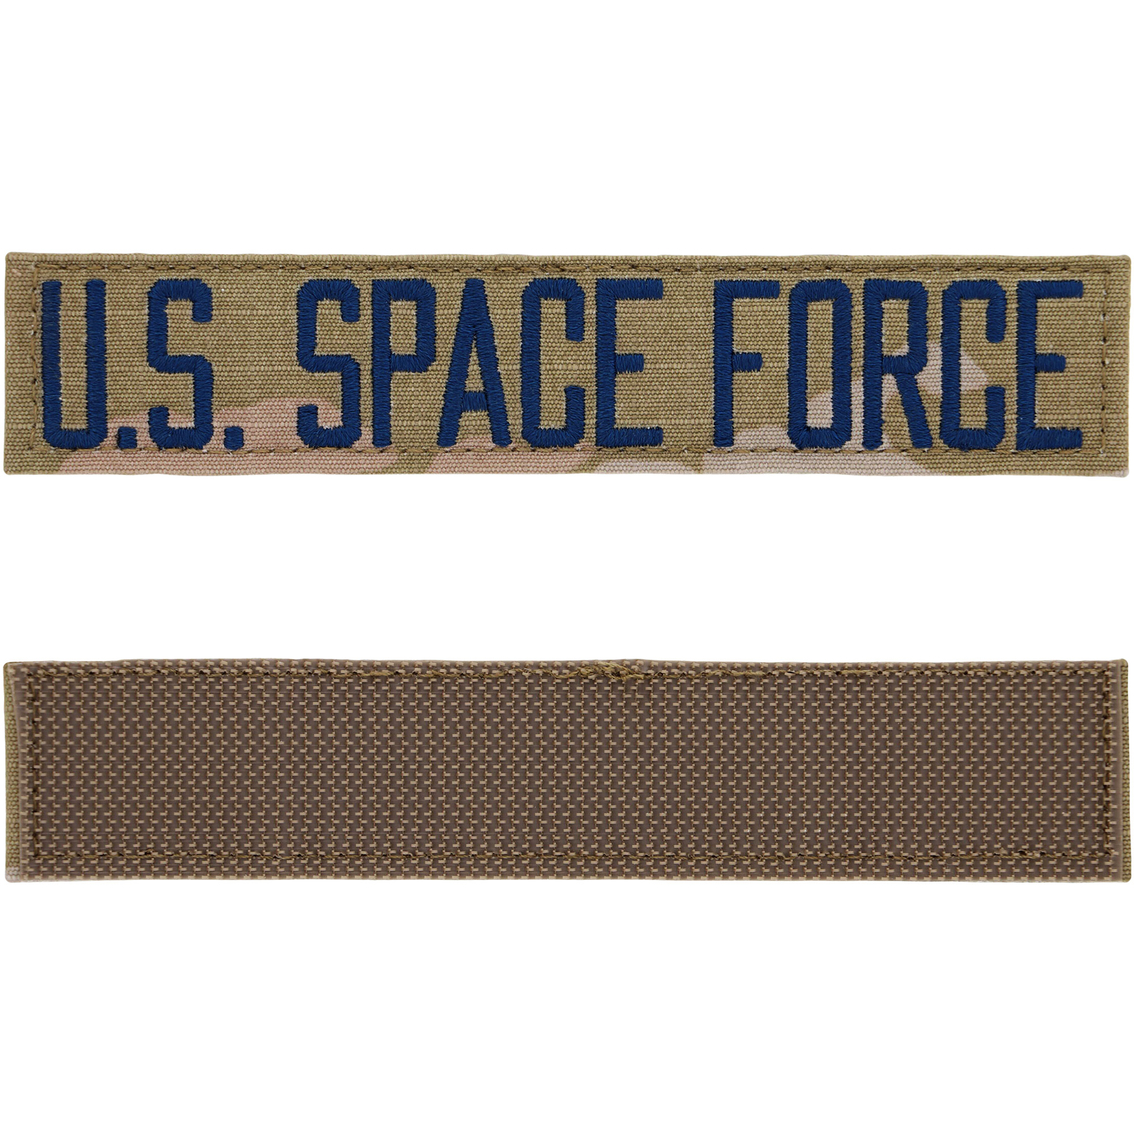 Space Force Branch Of Service Tape Hook & Loop